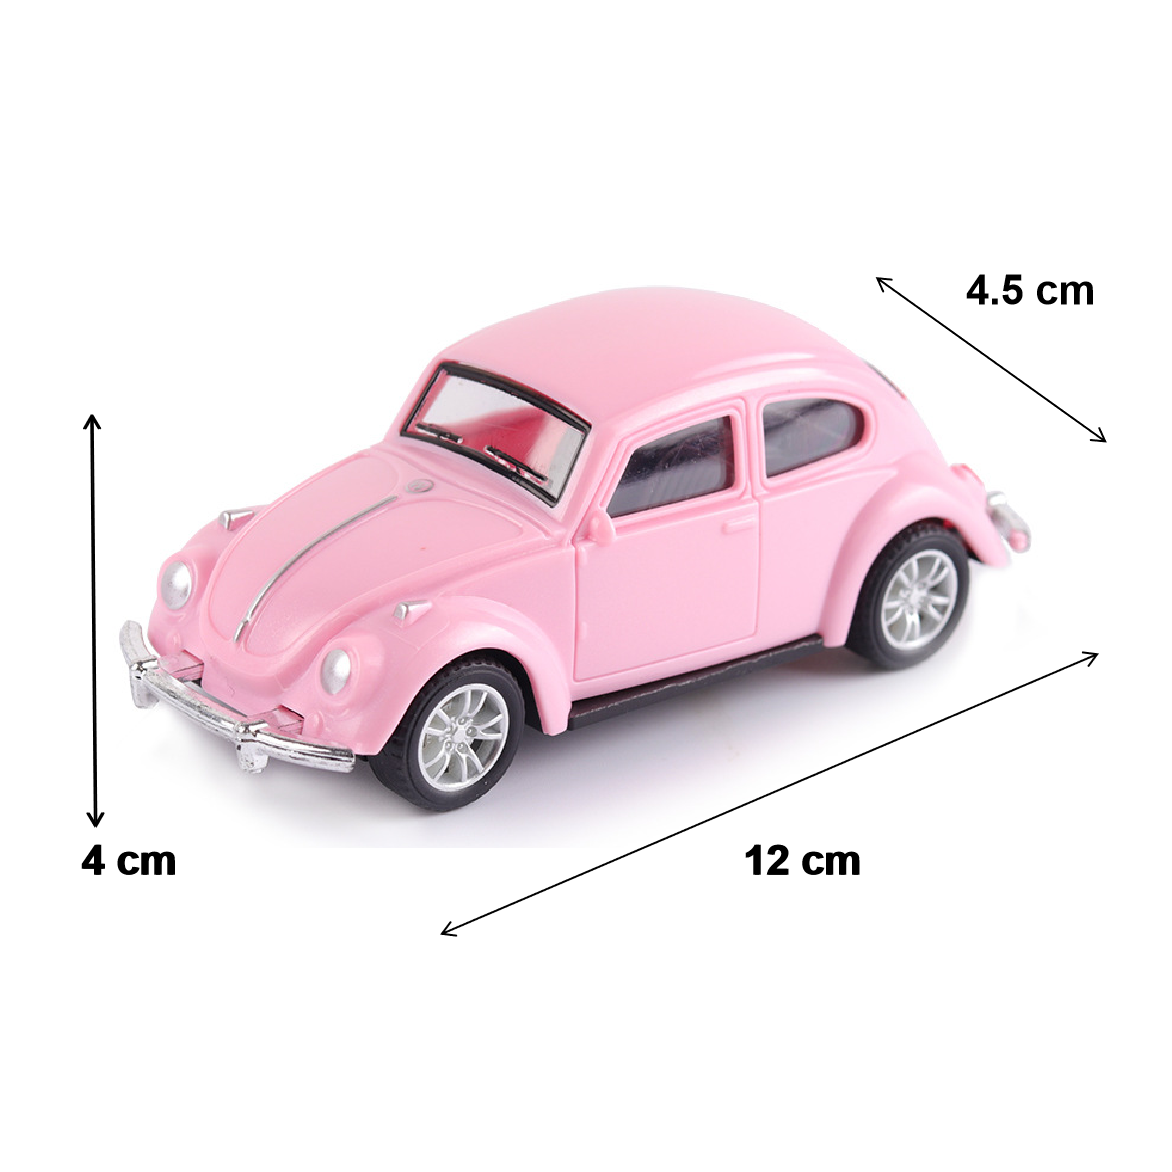 Cake Topper, Cake Decorations- VW 'Beetle' Car - pink - Rampant Coffee Company